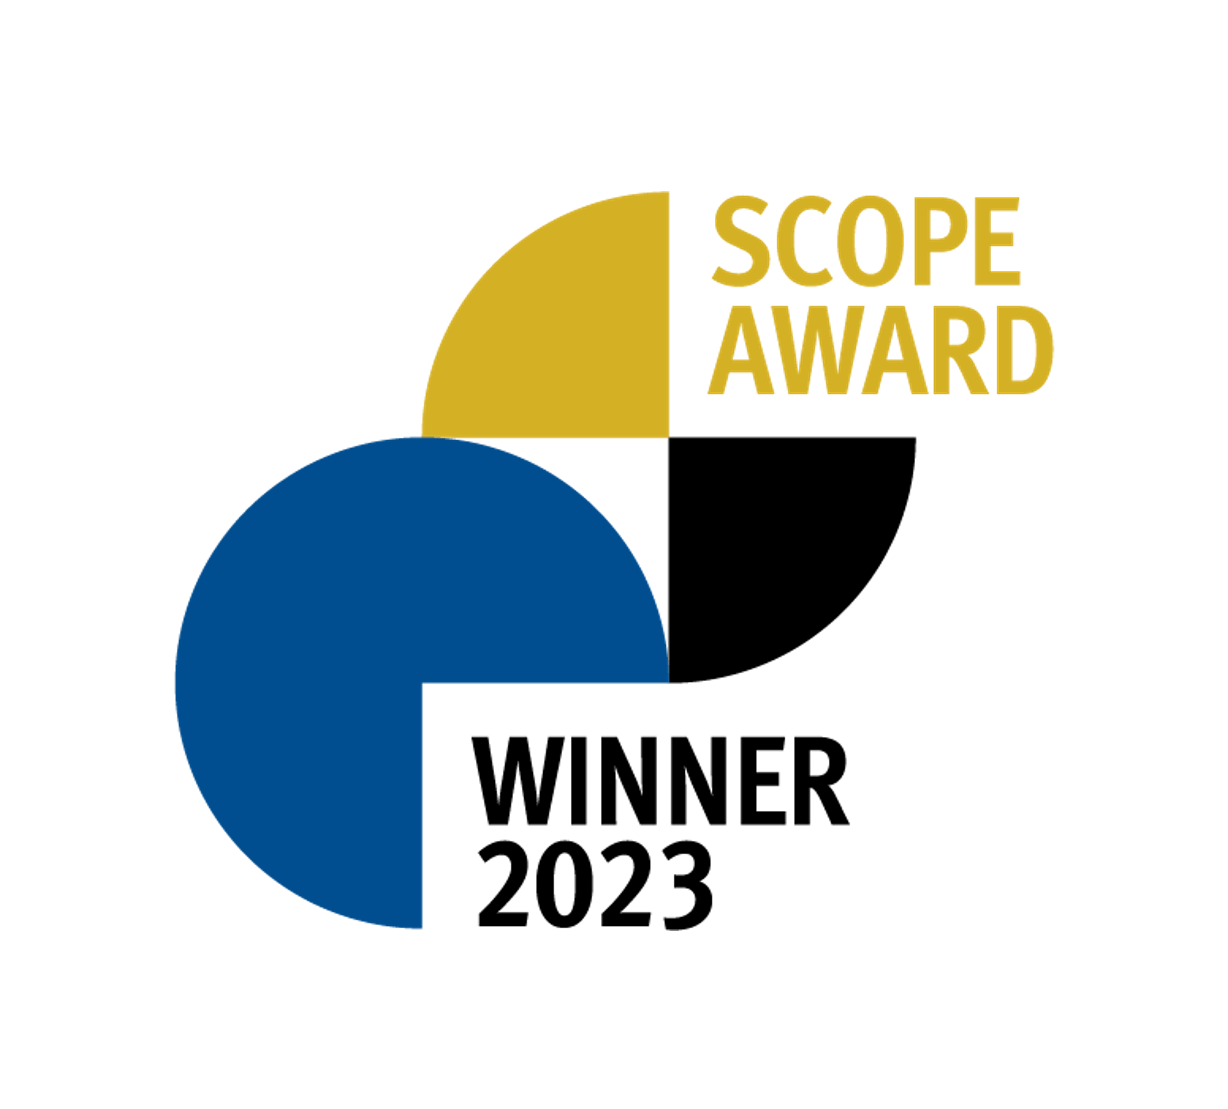 Berenberg Jobs - Careers Website - Awards - Scope Award Winner 2023 Image.png